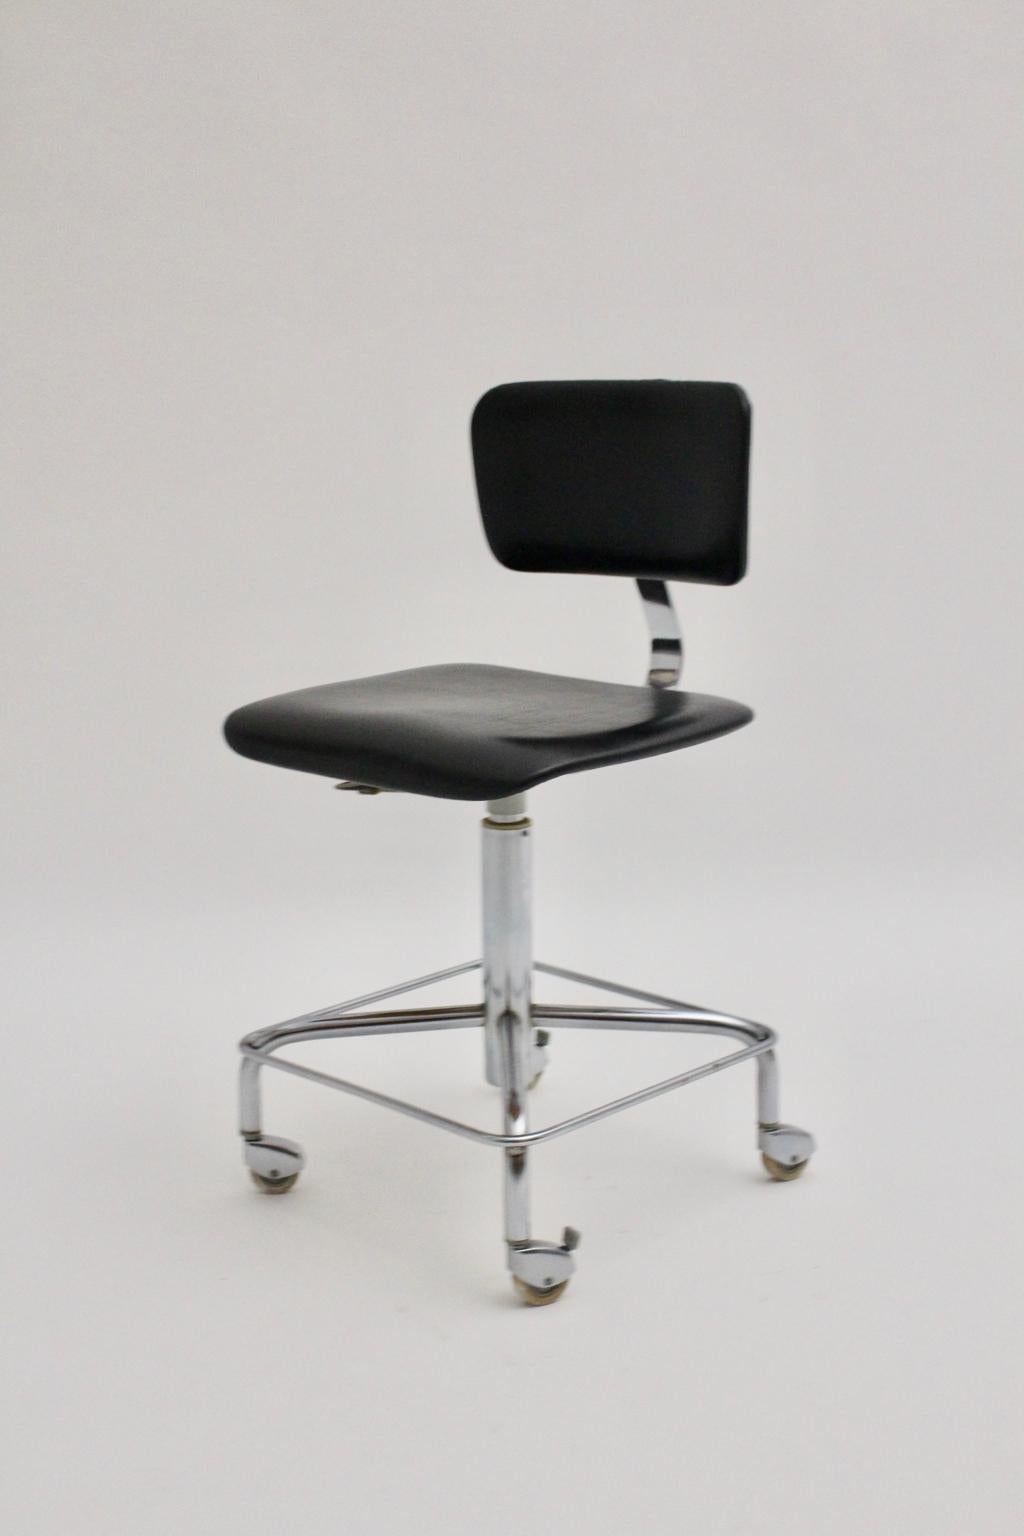 20th Century Mid-Century Modern Black Desk Chair by Egon Eiermann, Germany, 1950s